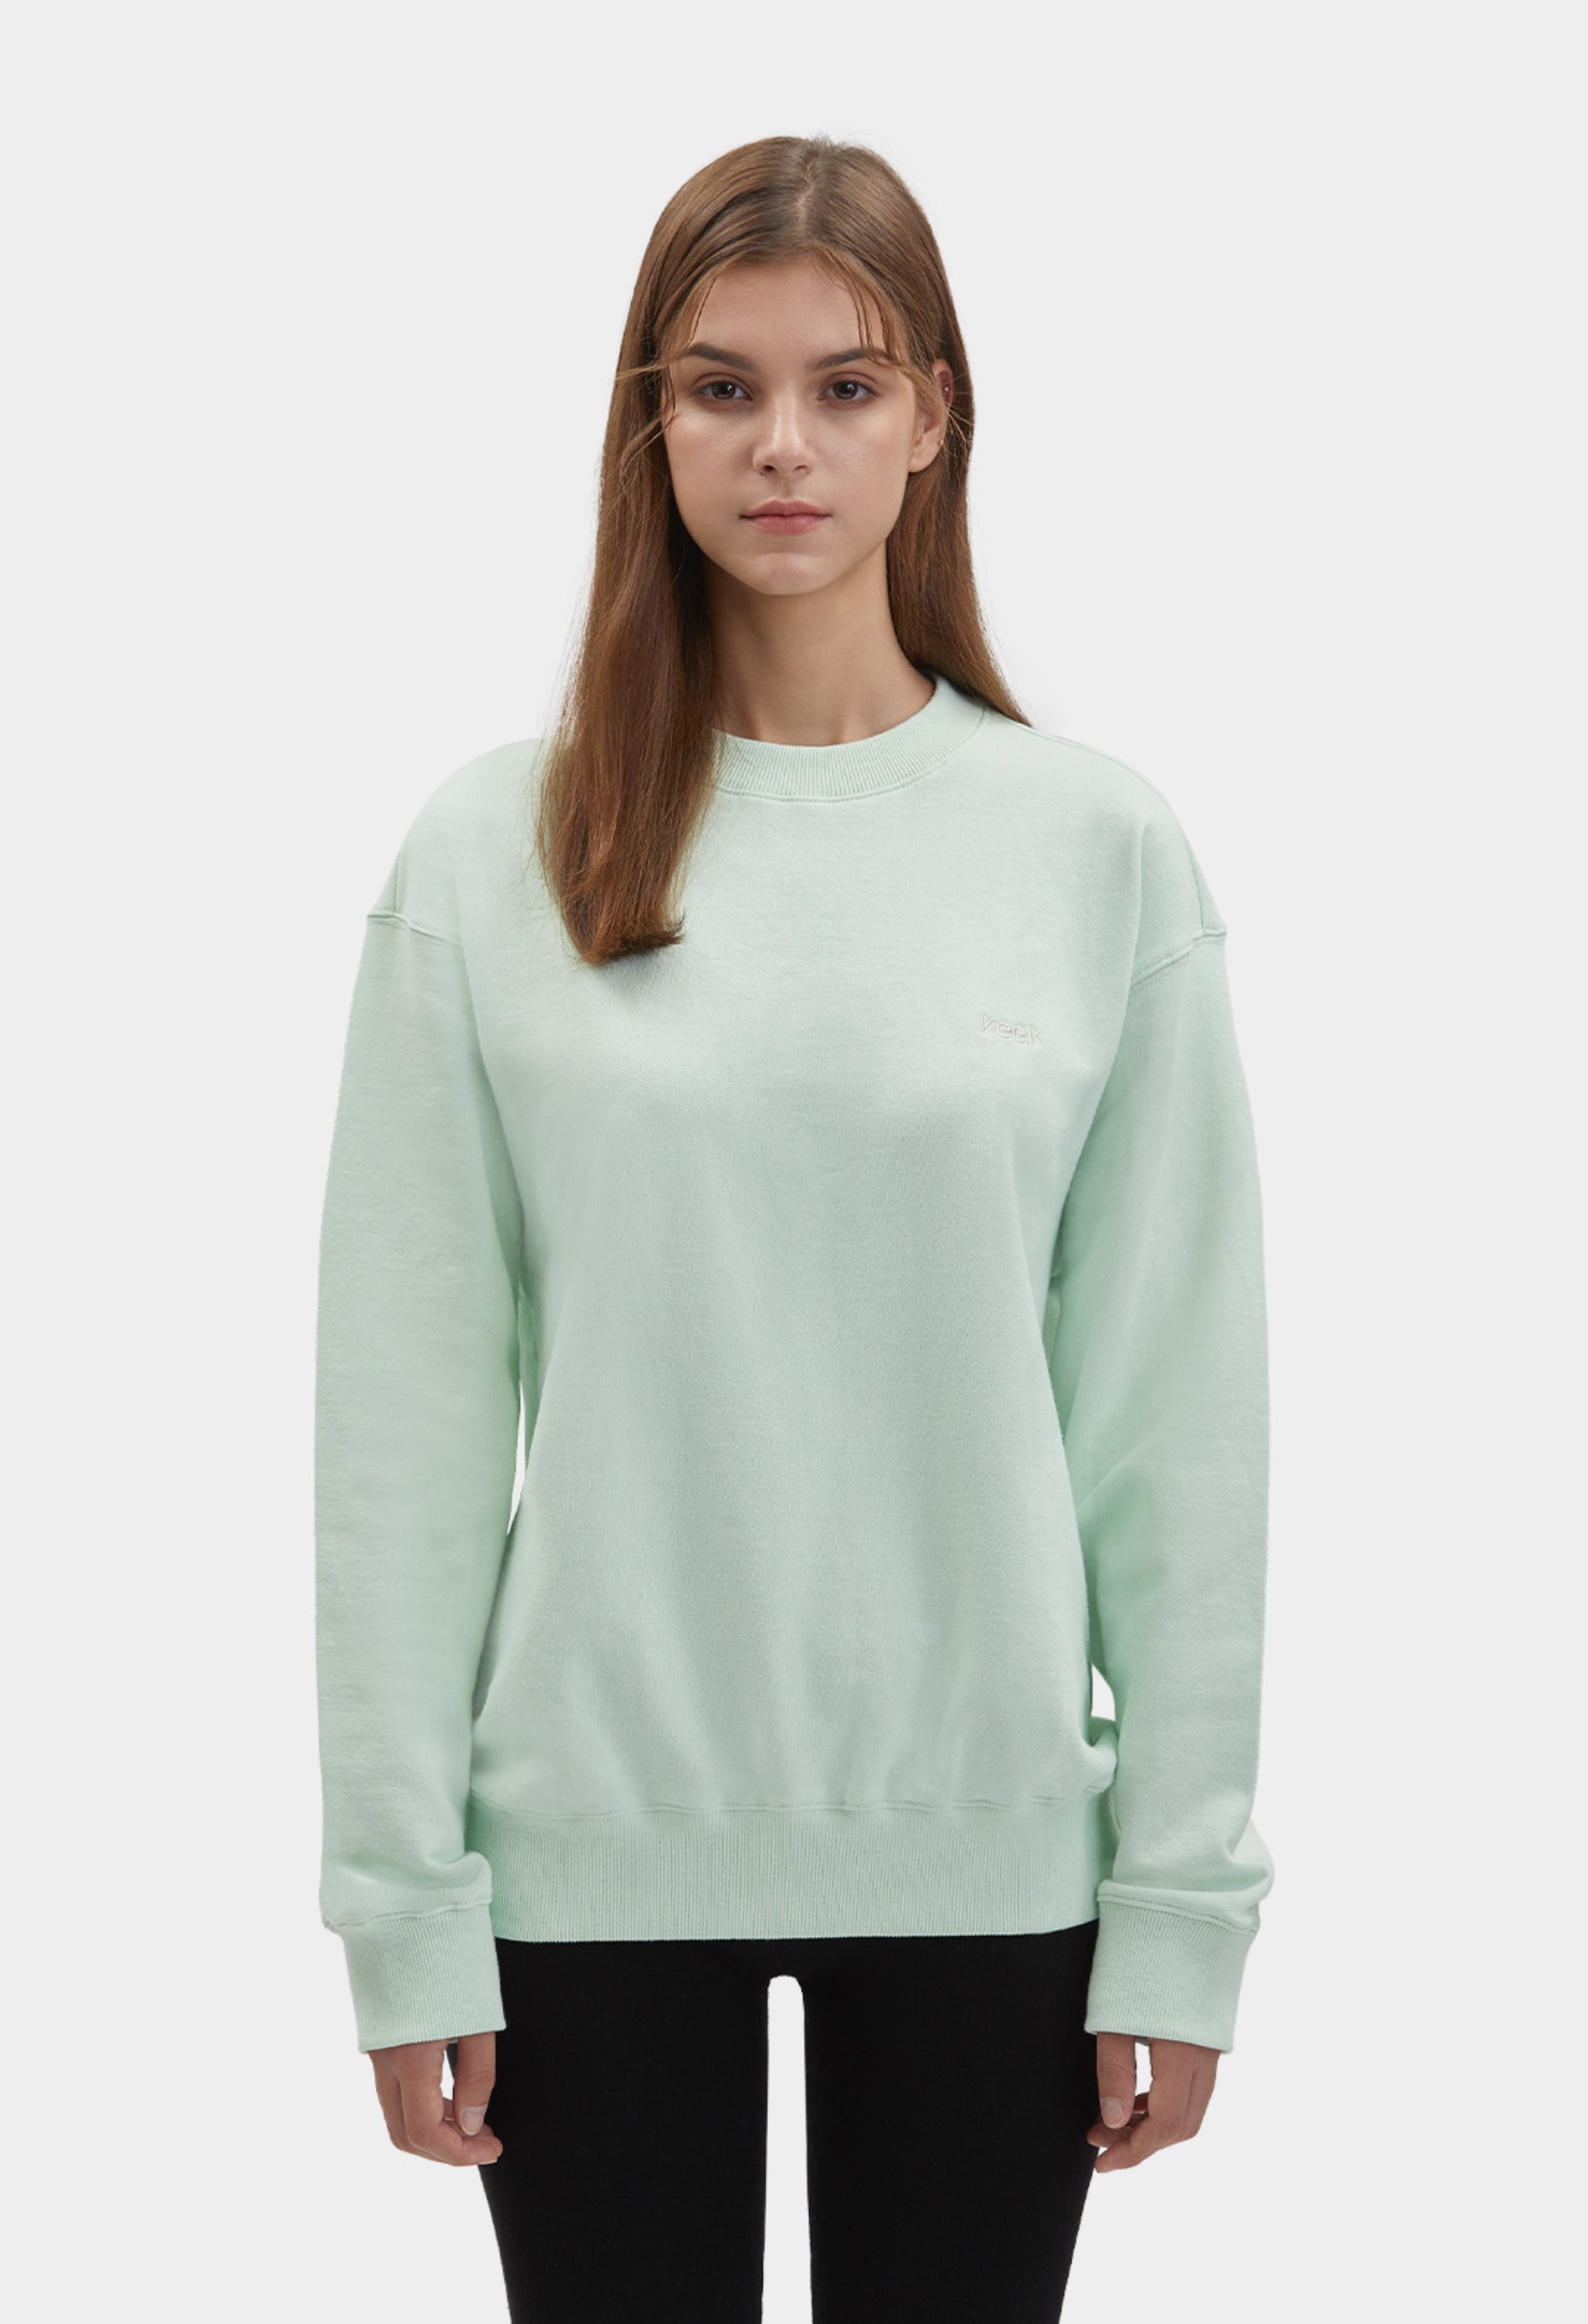 keek [Unisex] keek Sweatshirts - Light Mint 스트릿패션 유니섹스브랜드 커플시밀러룩 남자쇼핑몰 여성의류쇼핑몰 후드티 힙색